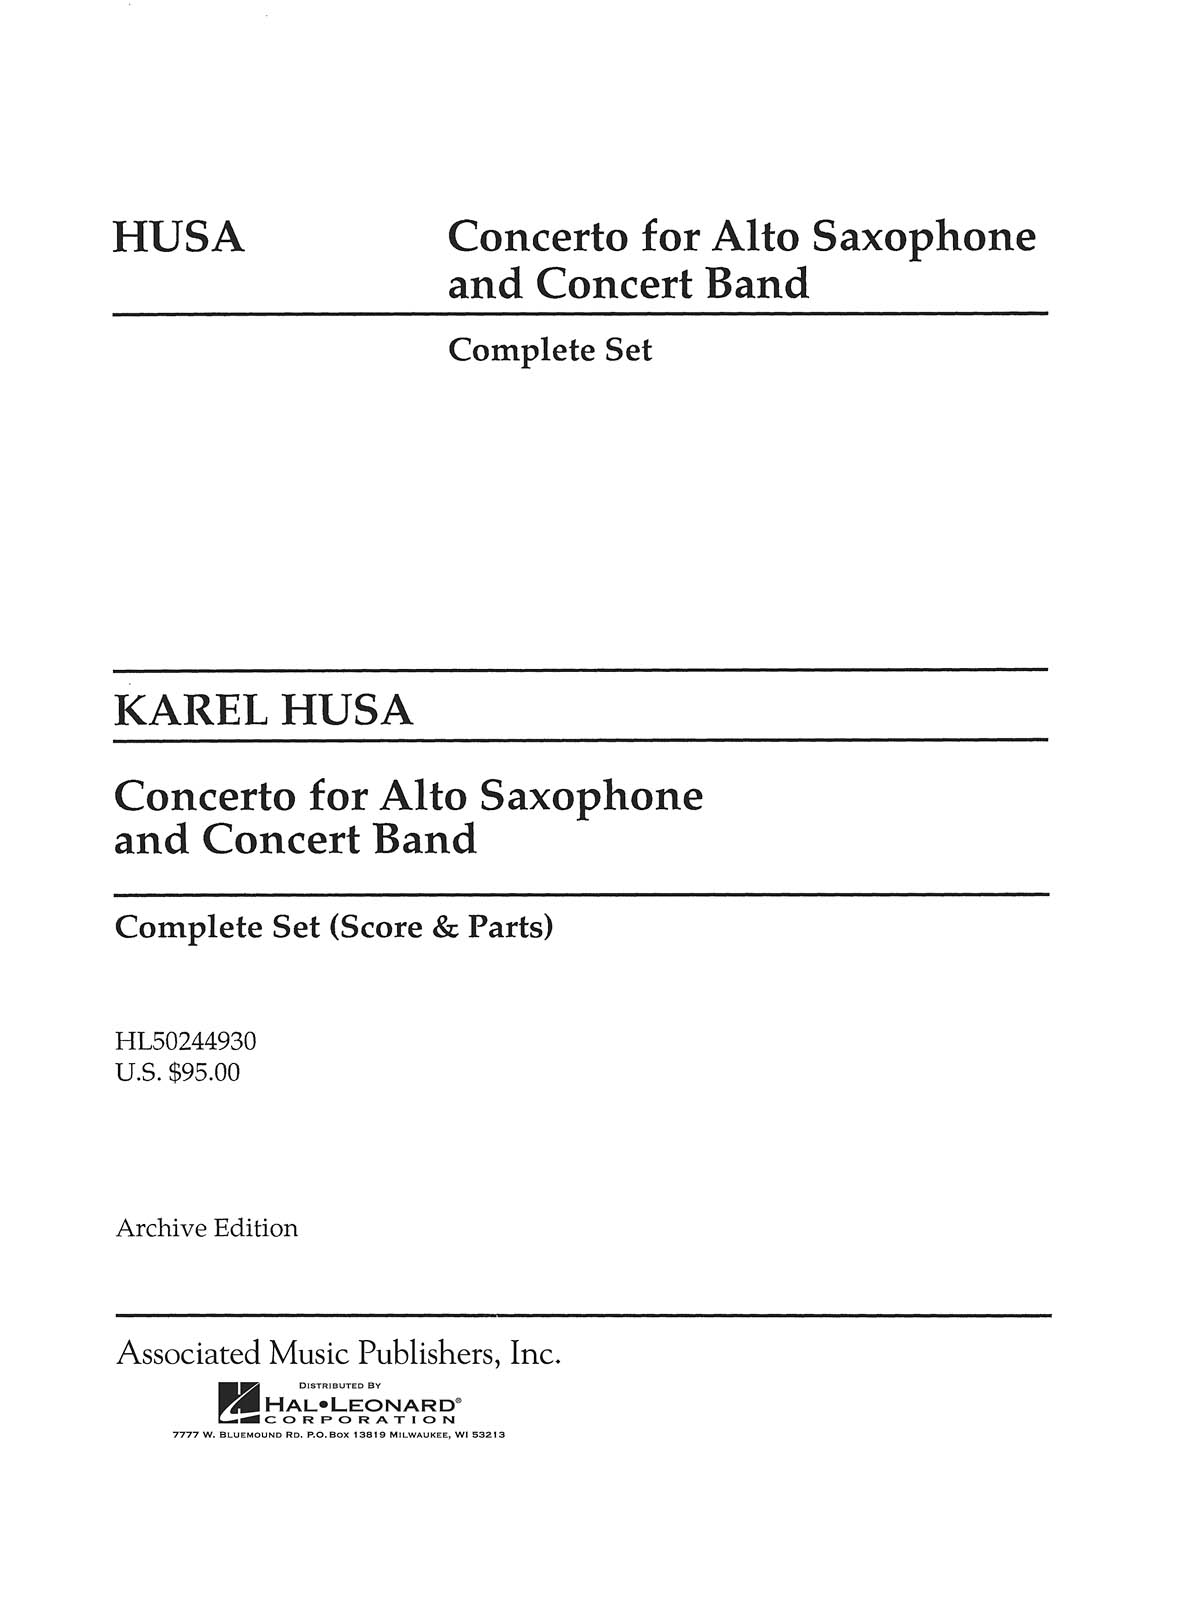 Karel Husa: Concerto For Alto Saxophone And Concert Band (Score/Parts)